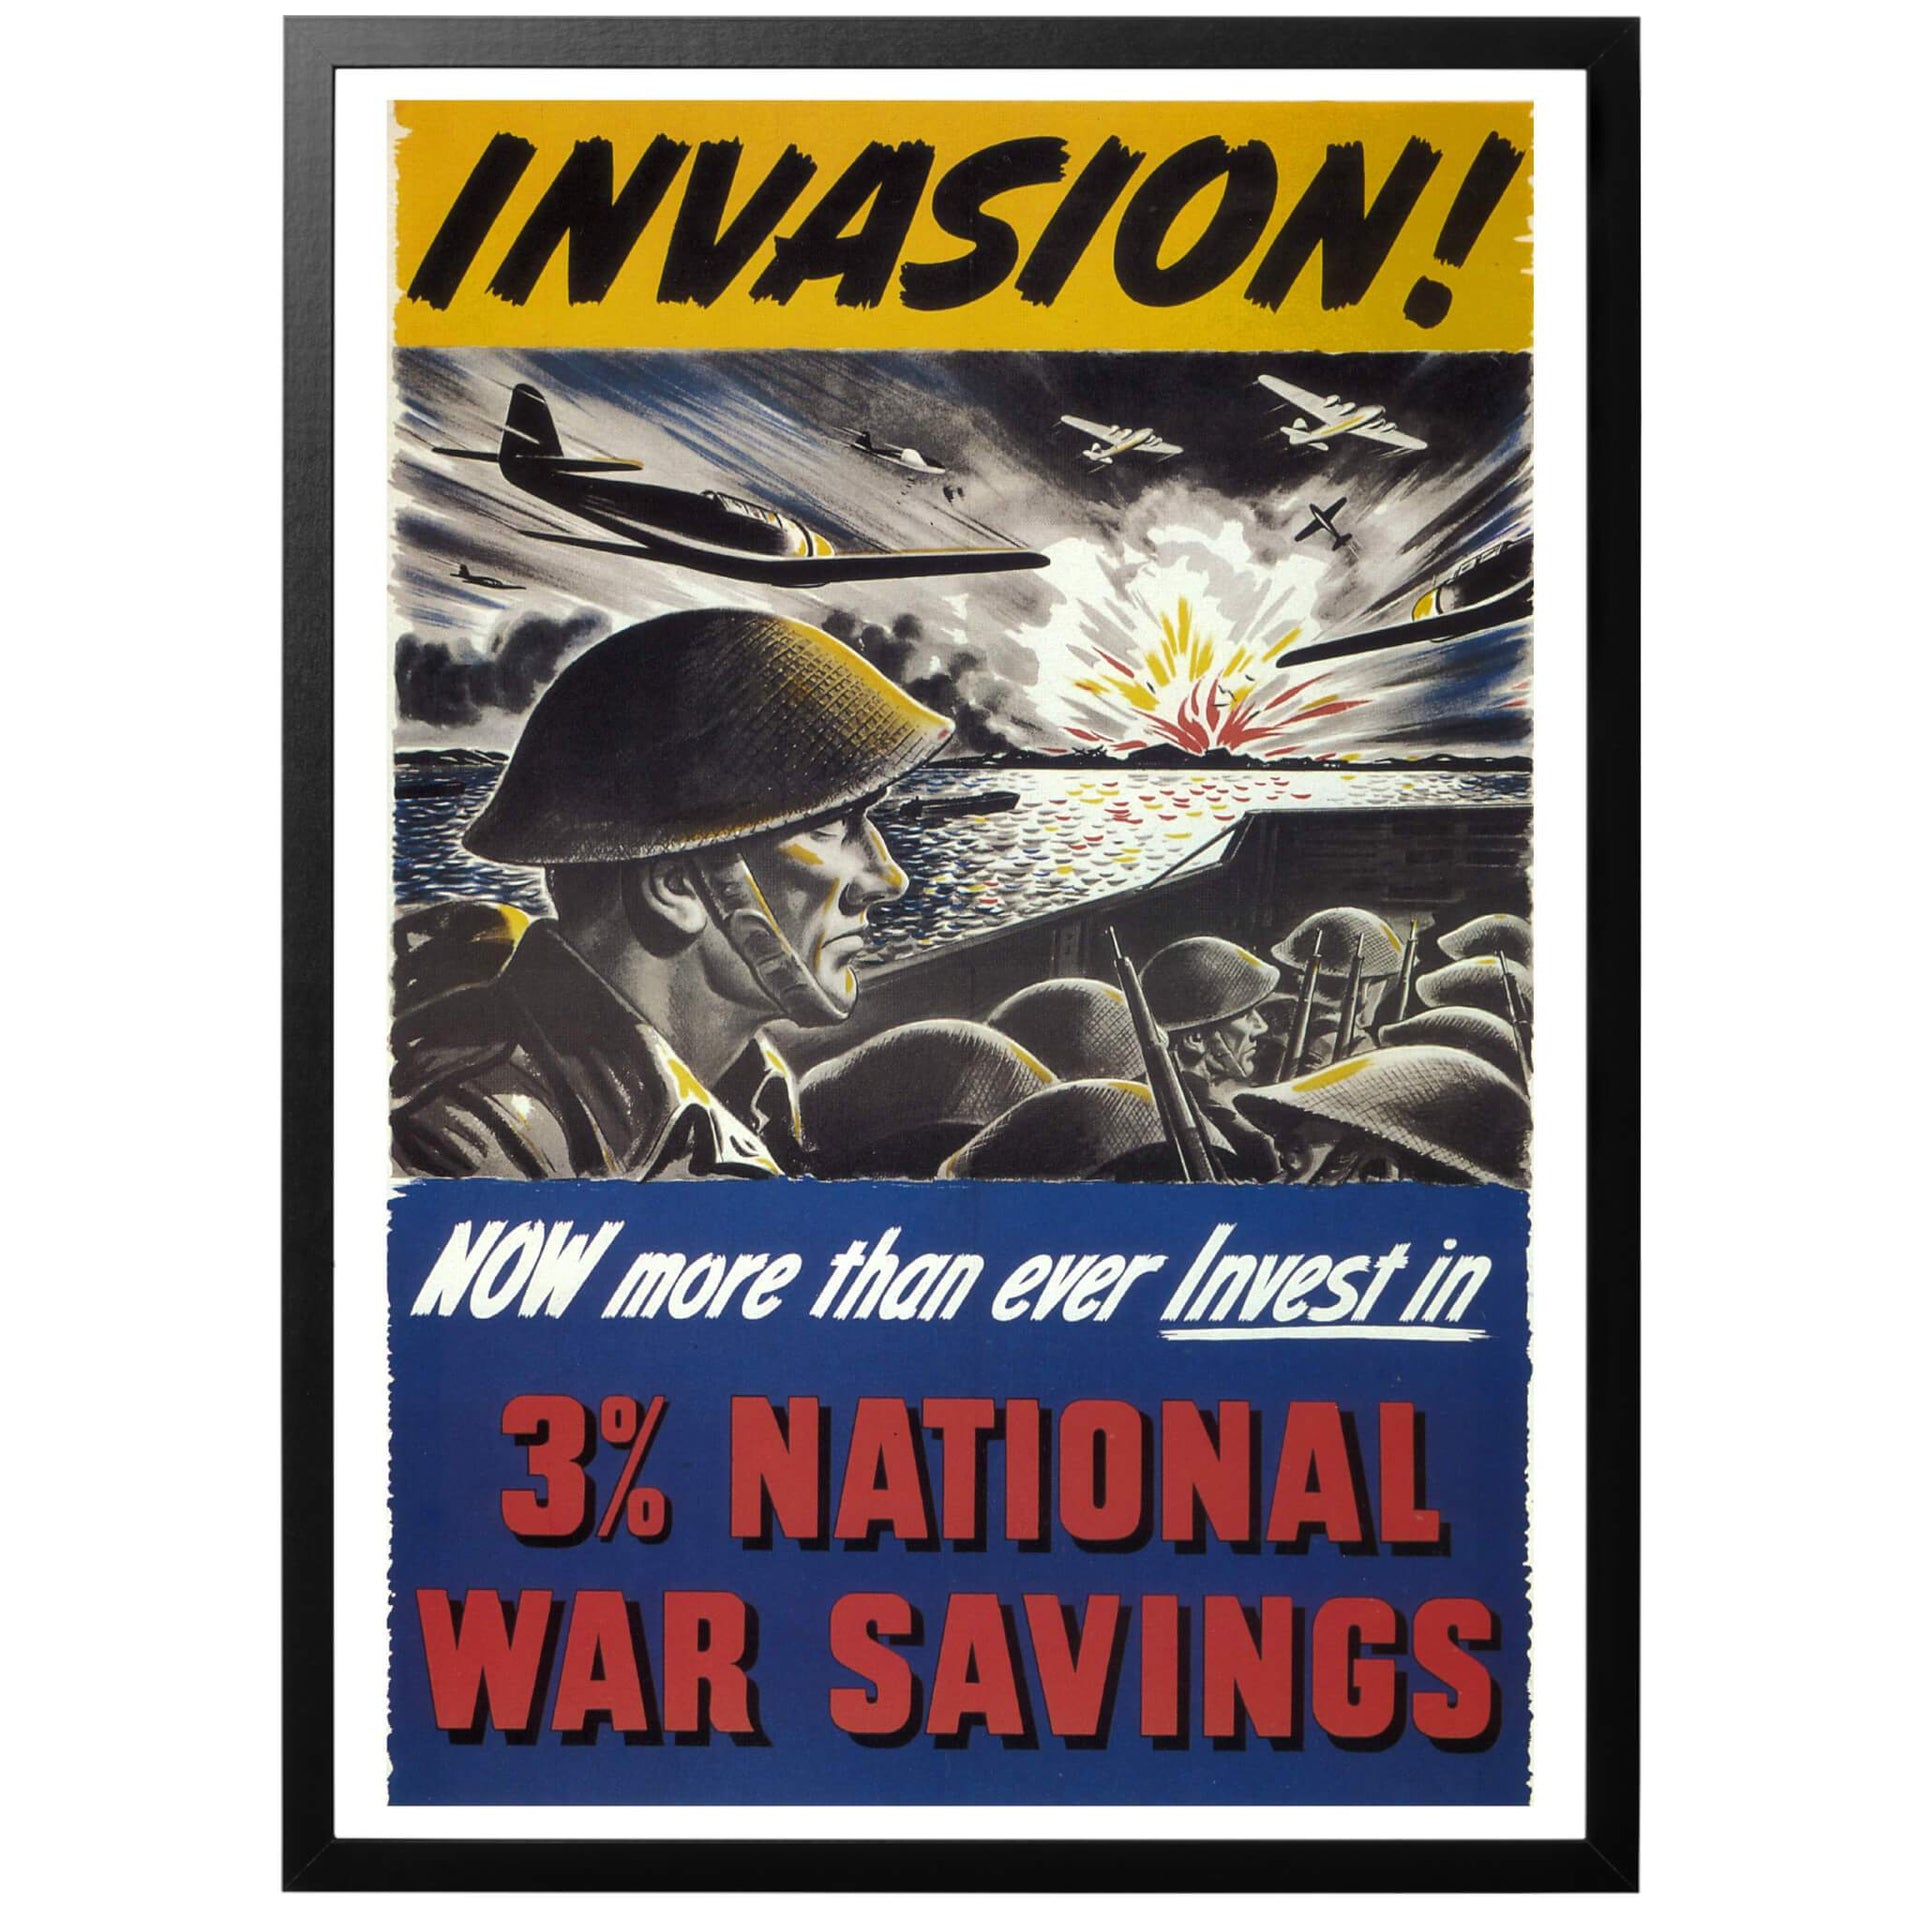 INVASION - Now more than ever invest in 3% National War Savings Sv - "INVASION - Nu mer än någonsin, investera i 3% nationella krigsobligationer" Brittisk WWII affisch från 1942. En serietidningsliknande affisch som gör reklam för krigsobligationer.